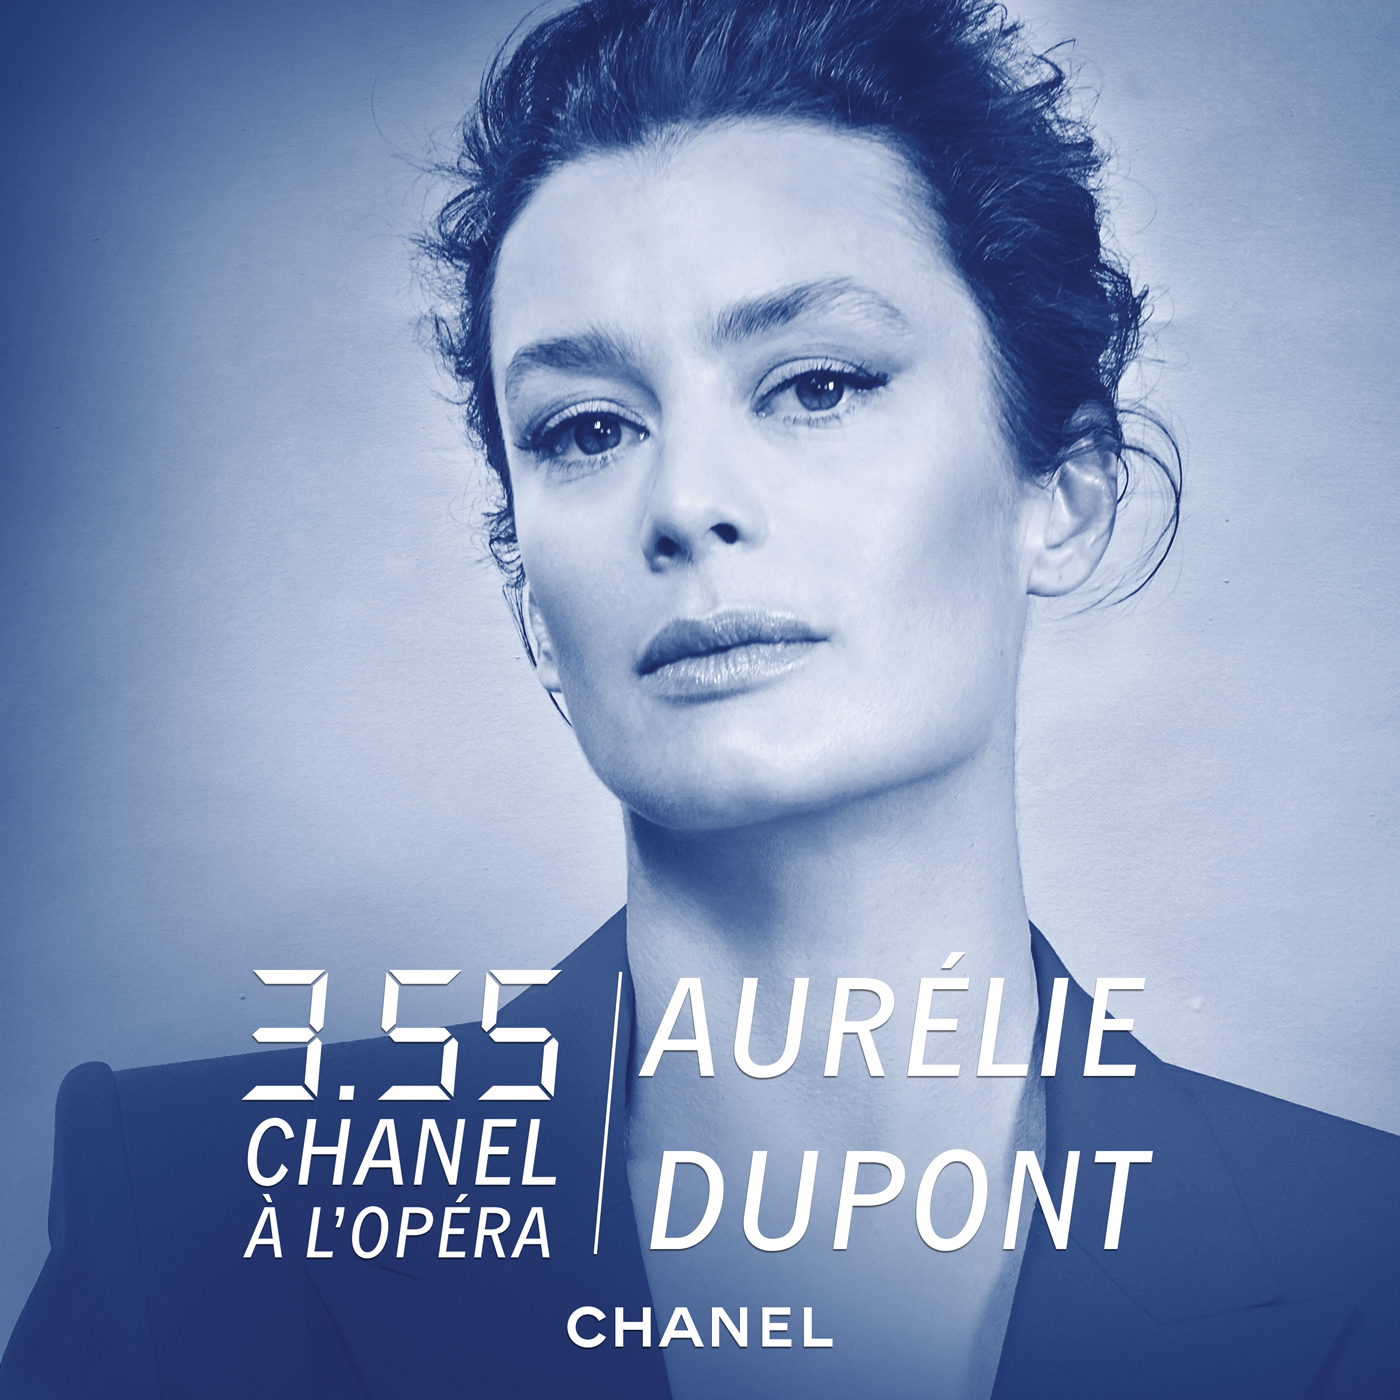 Aurélie Dupont — CHANEL at the Opéra